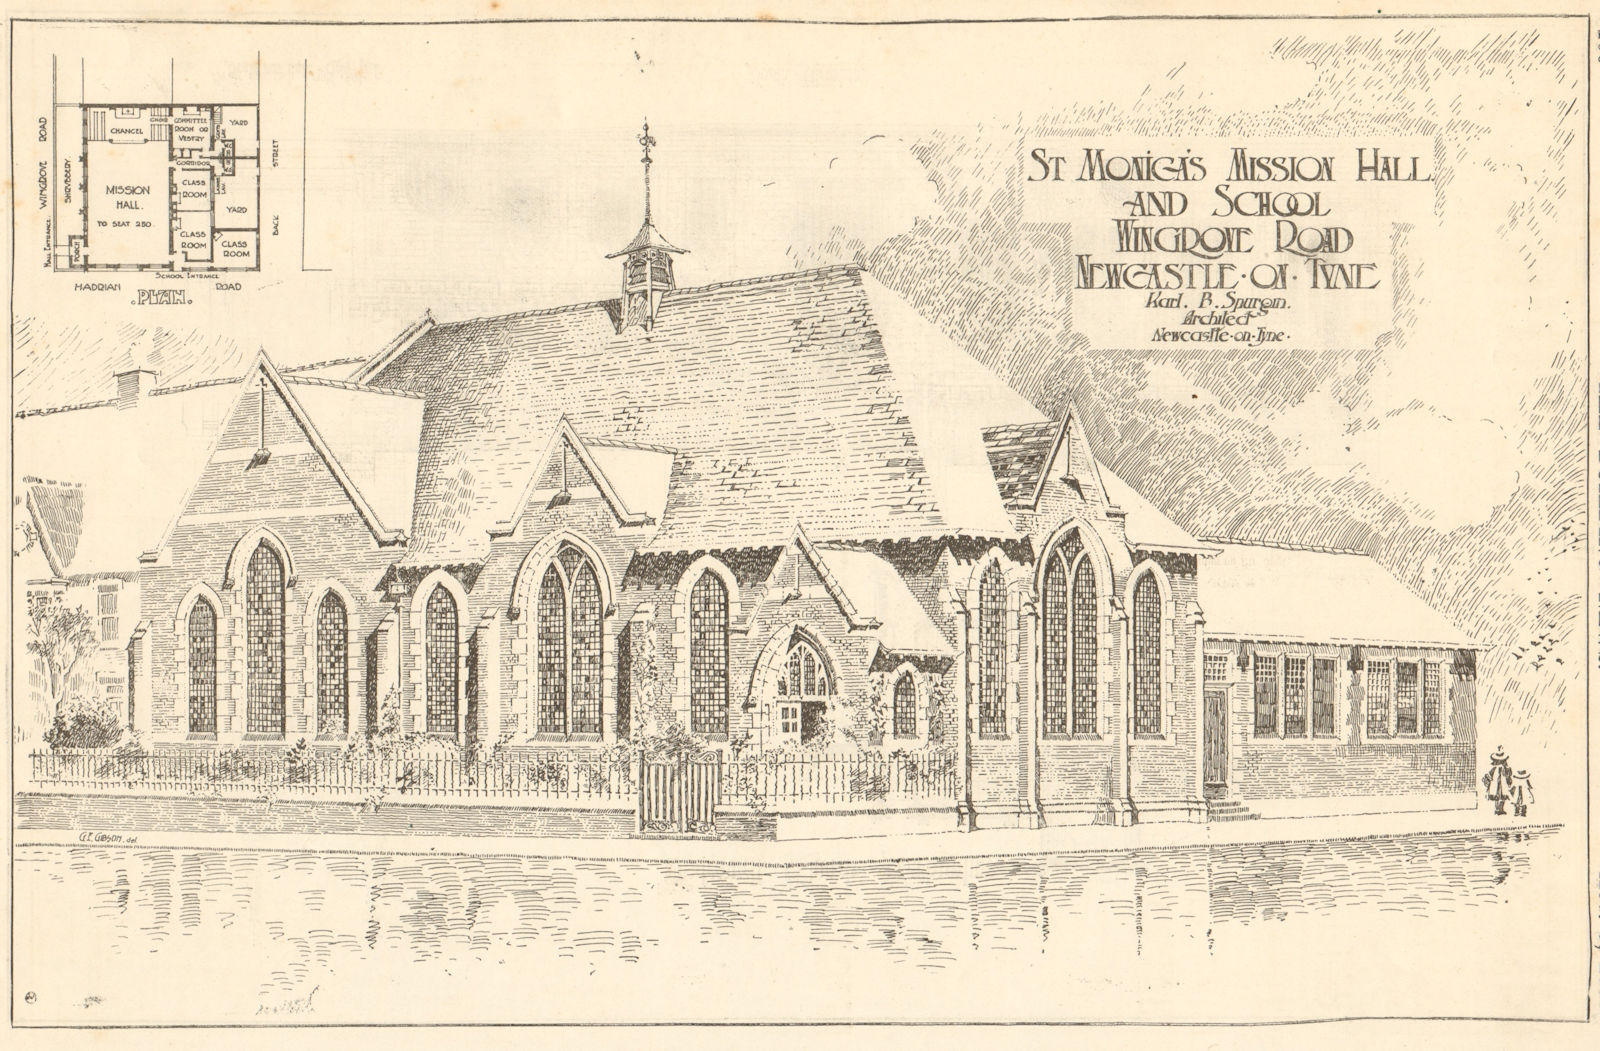 St Monica's Mission Hall & School, Wingrove Road, Newcastle-upon-Tyne 1906